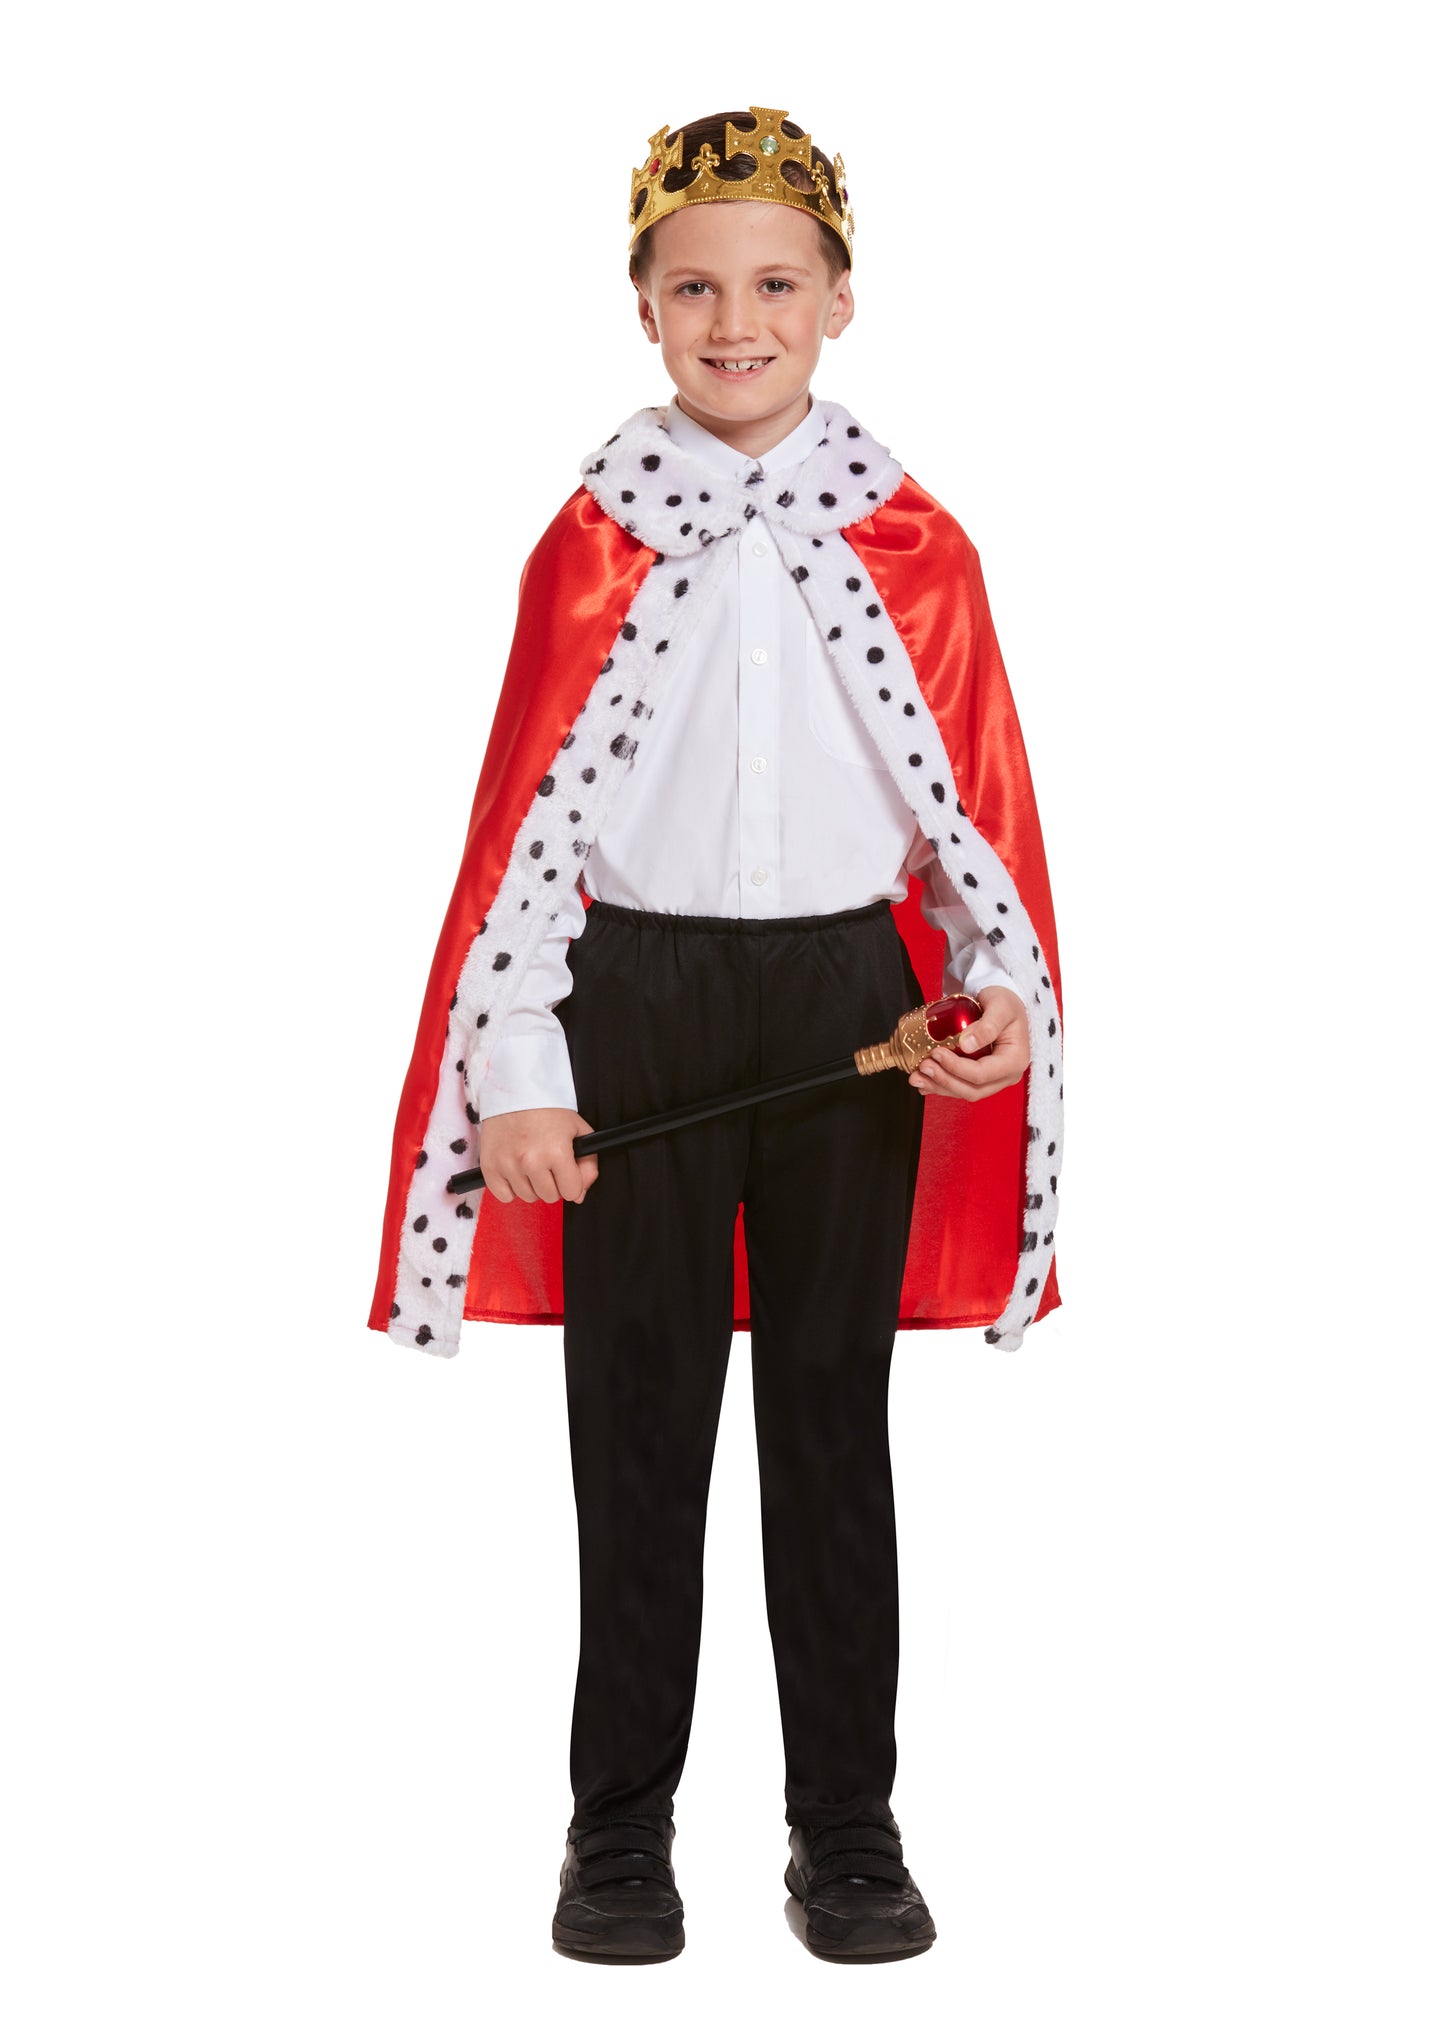 Kings Robe Child Fancy Dress Costume, Coronation, Theme Days